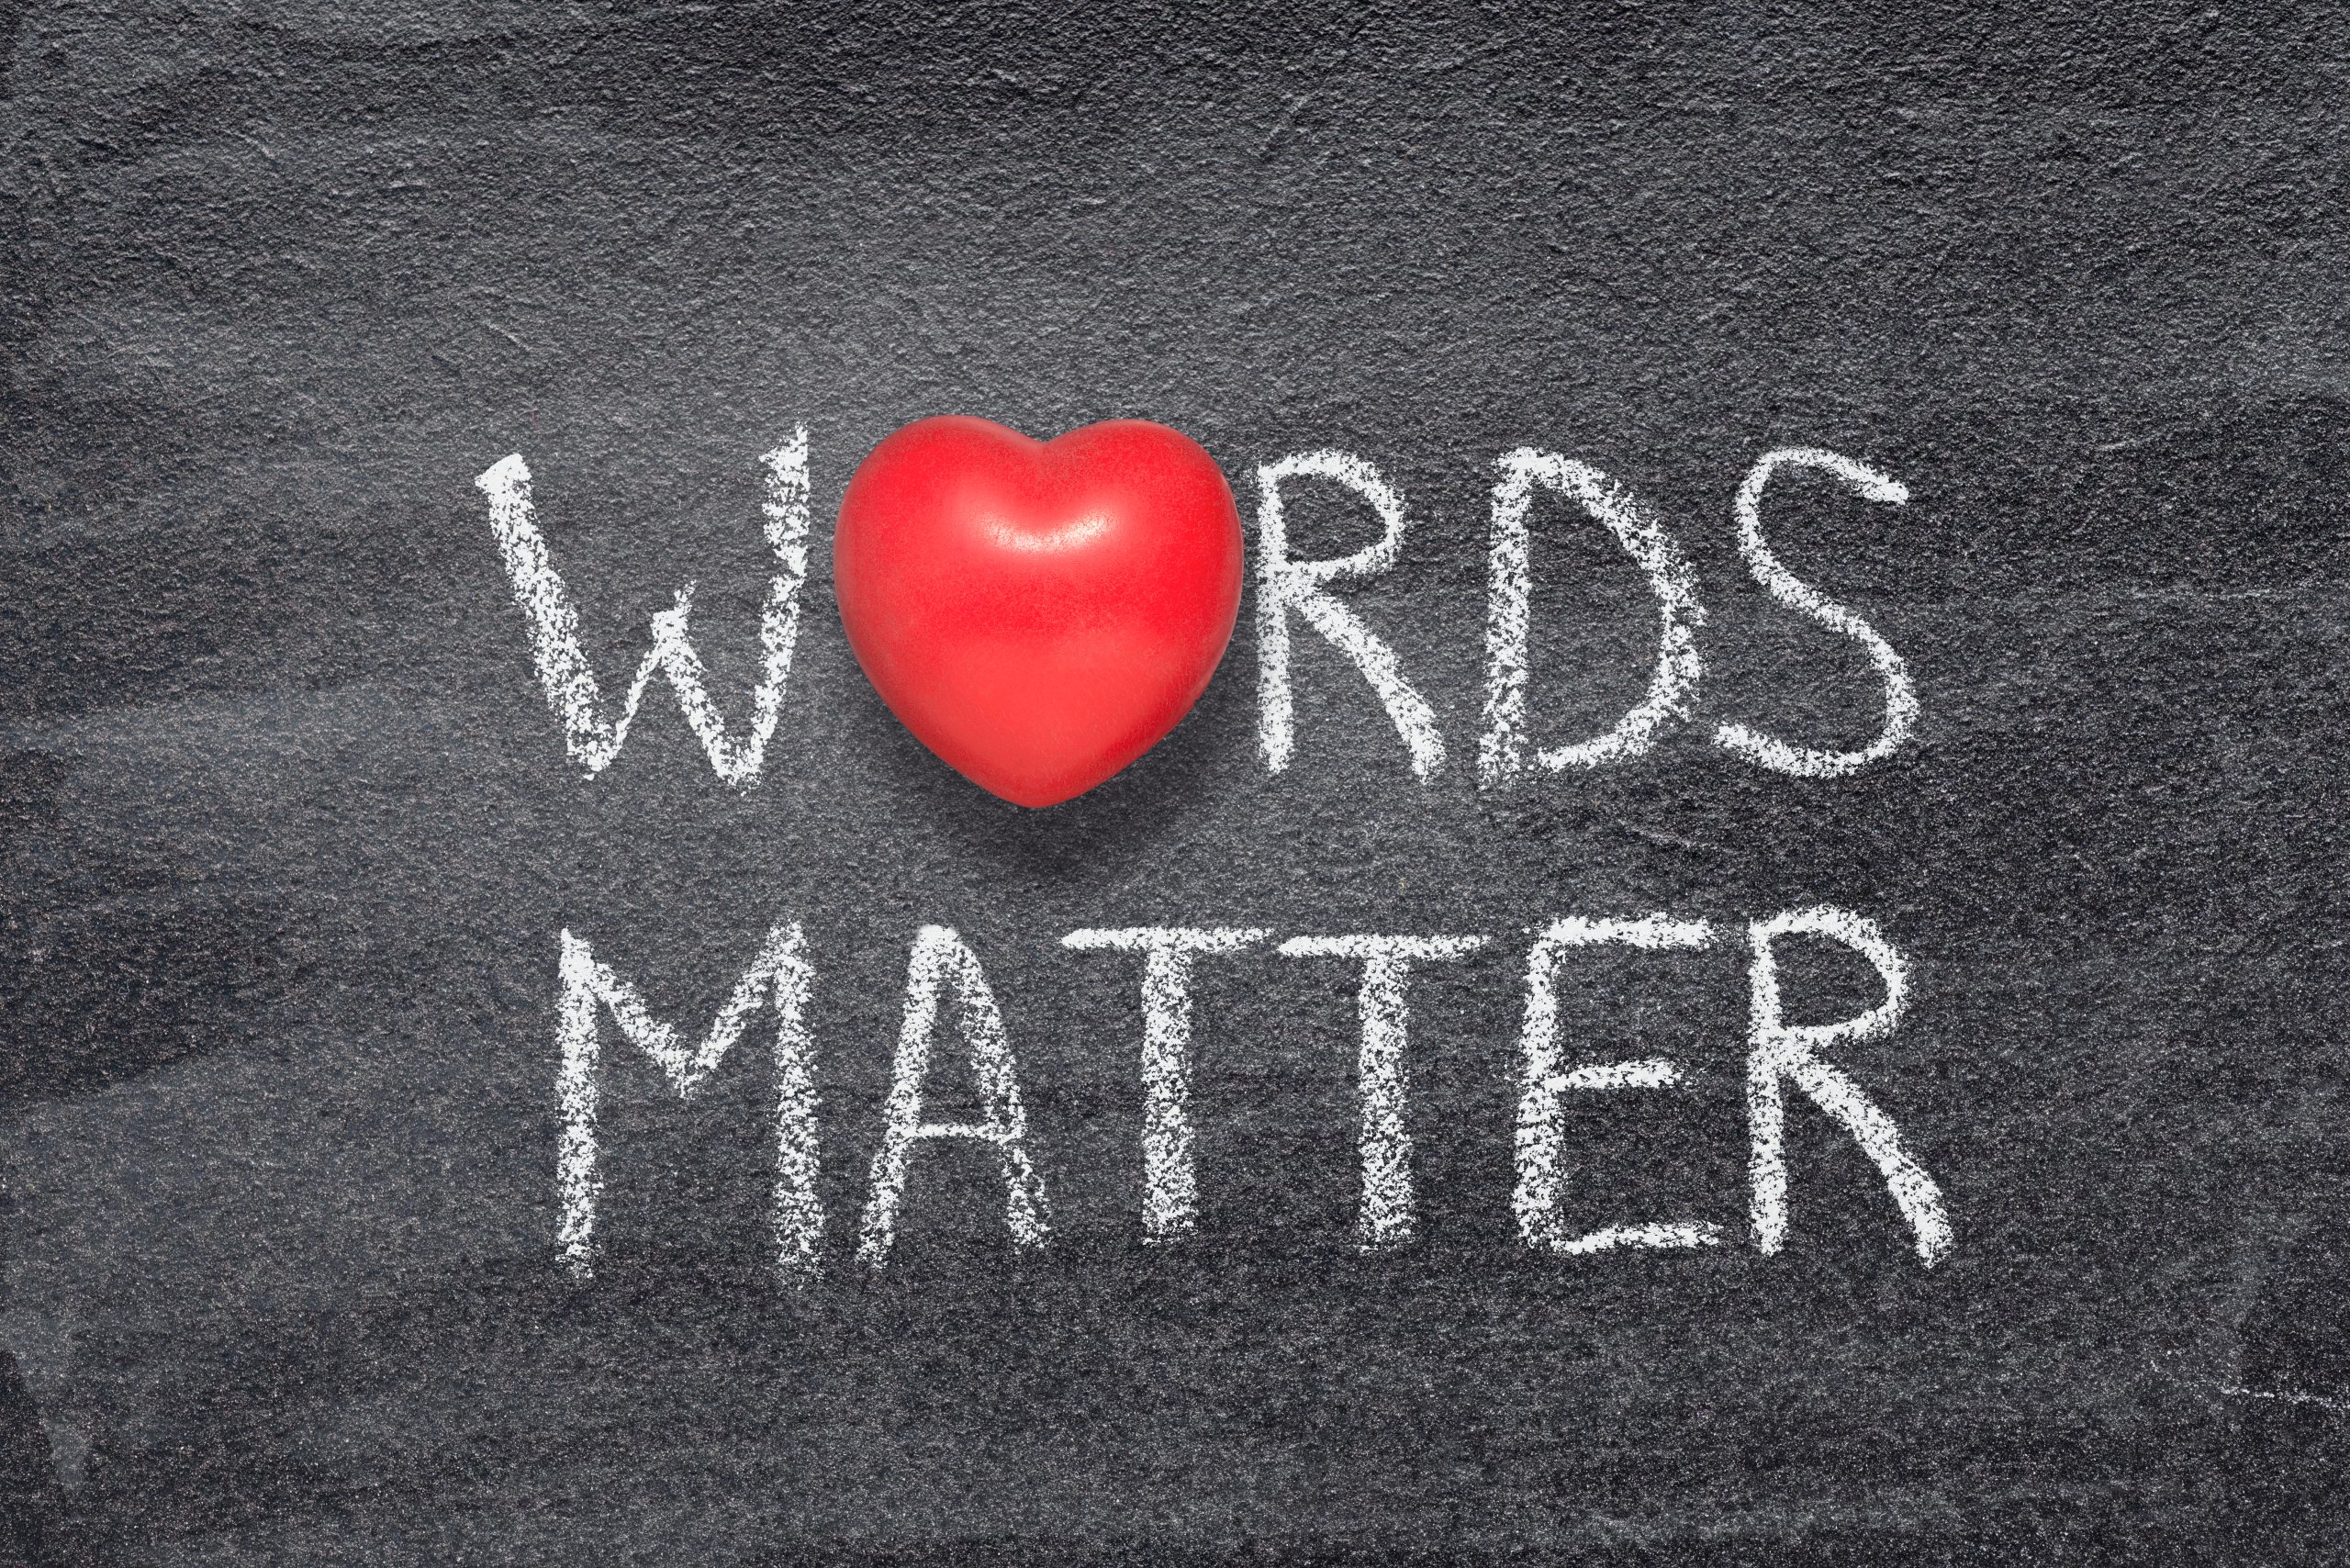 Words,Matter,Phrase,Written,On,Chalkboard,With,Red,Heart,Symbol